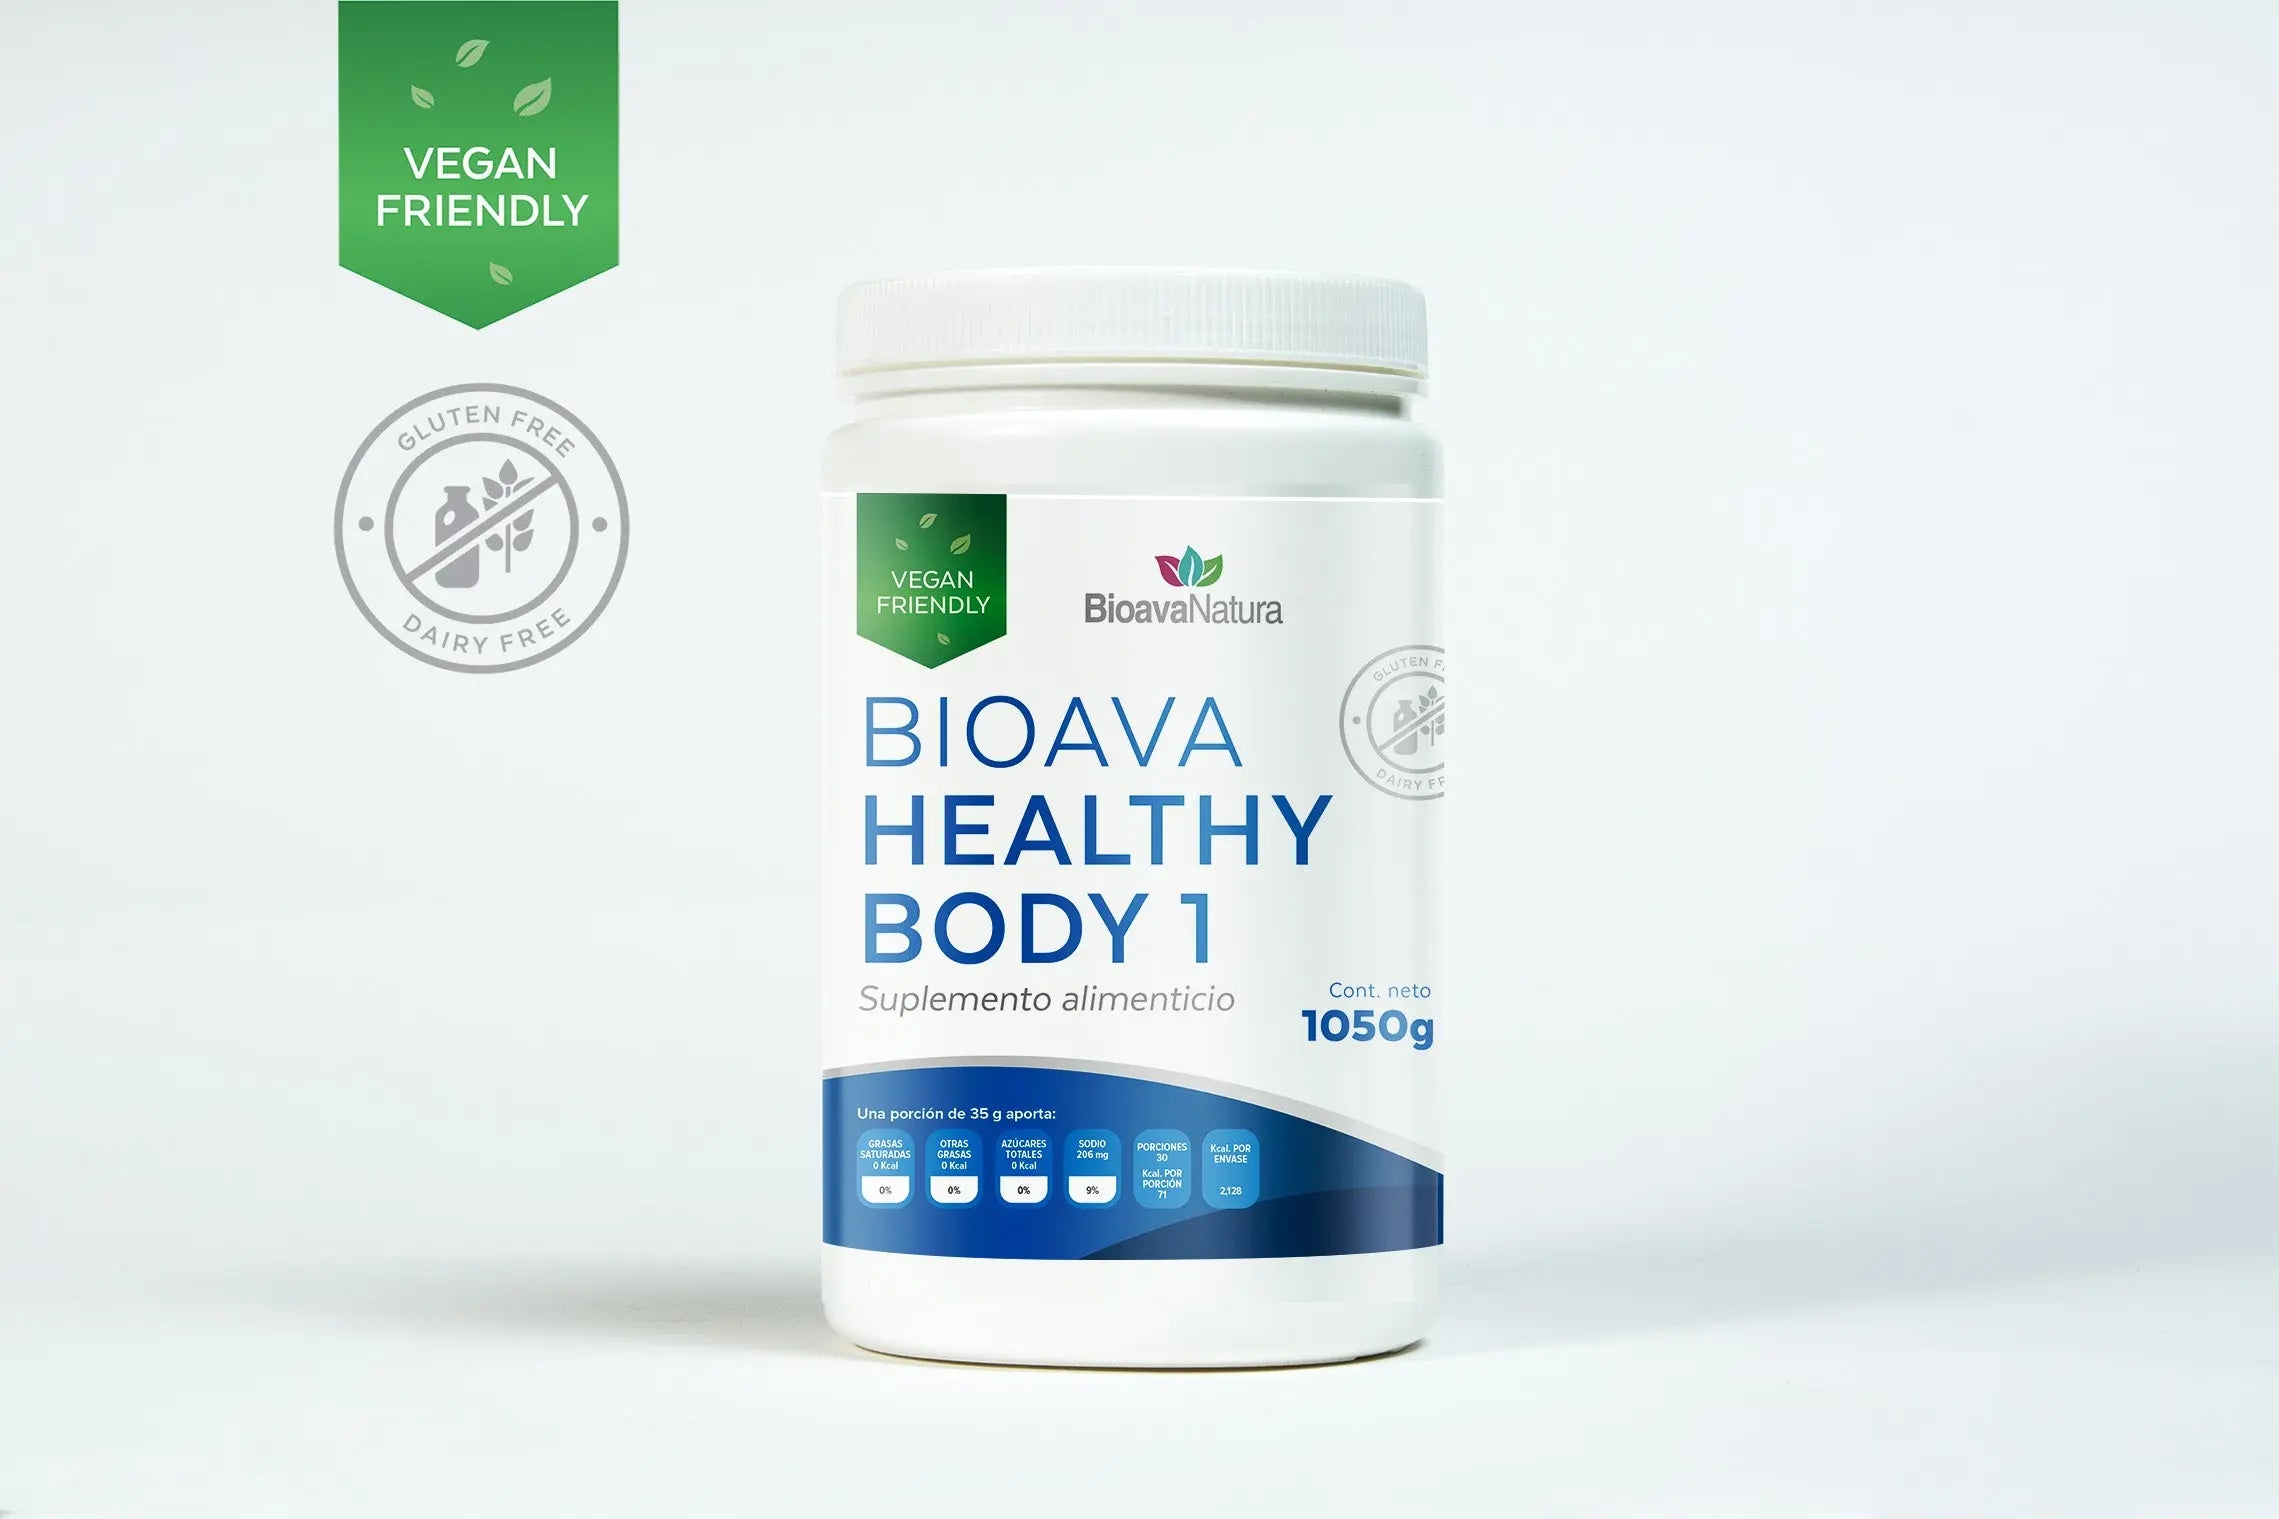 BIOAVA HEALTHY BODY 1 - Bioavanatura